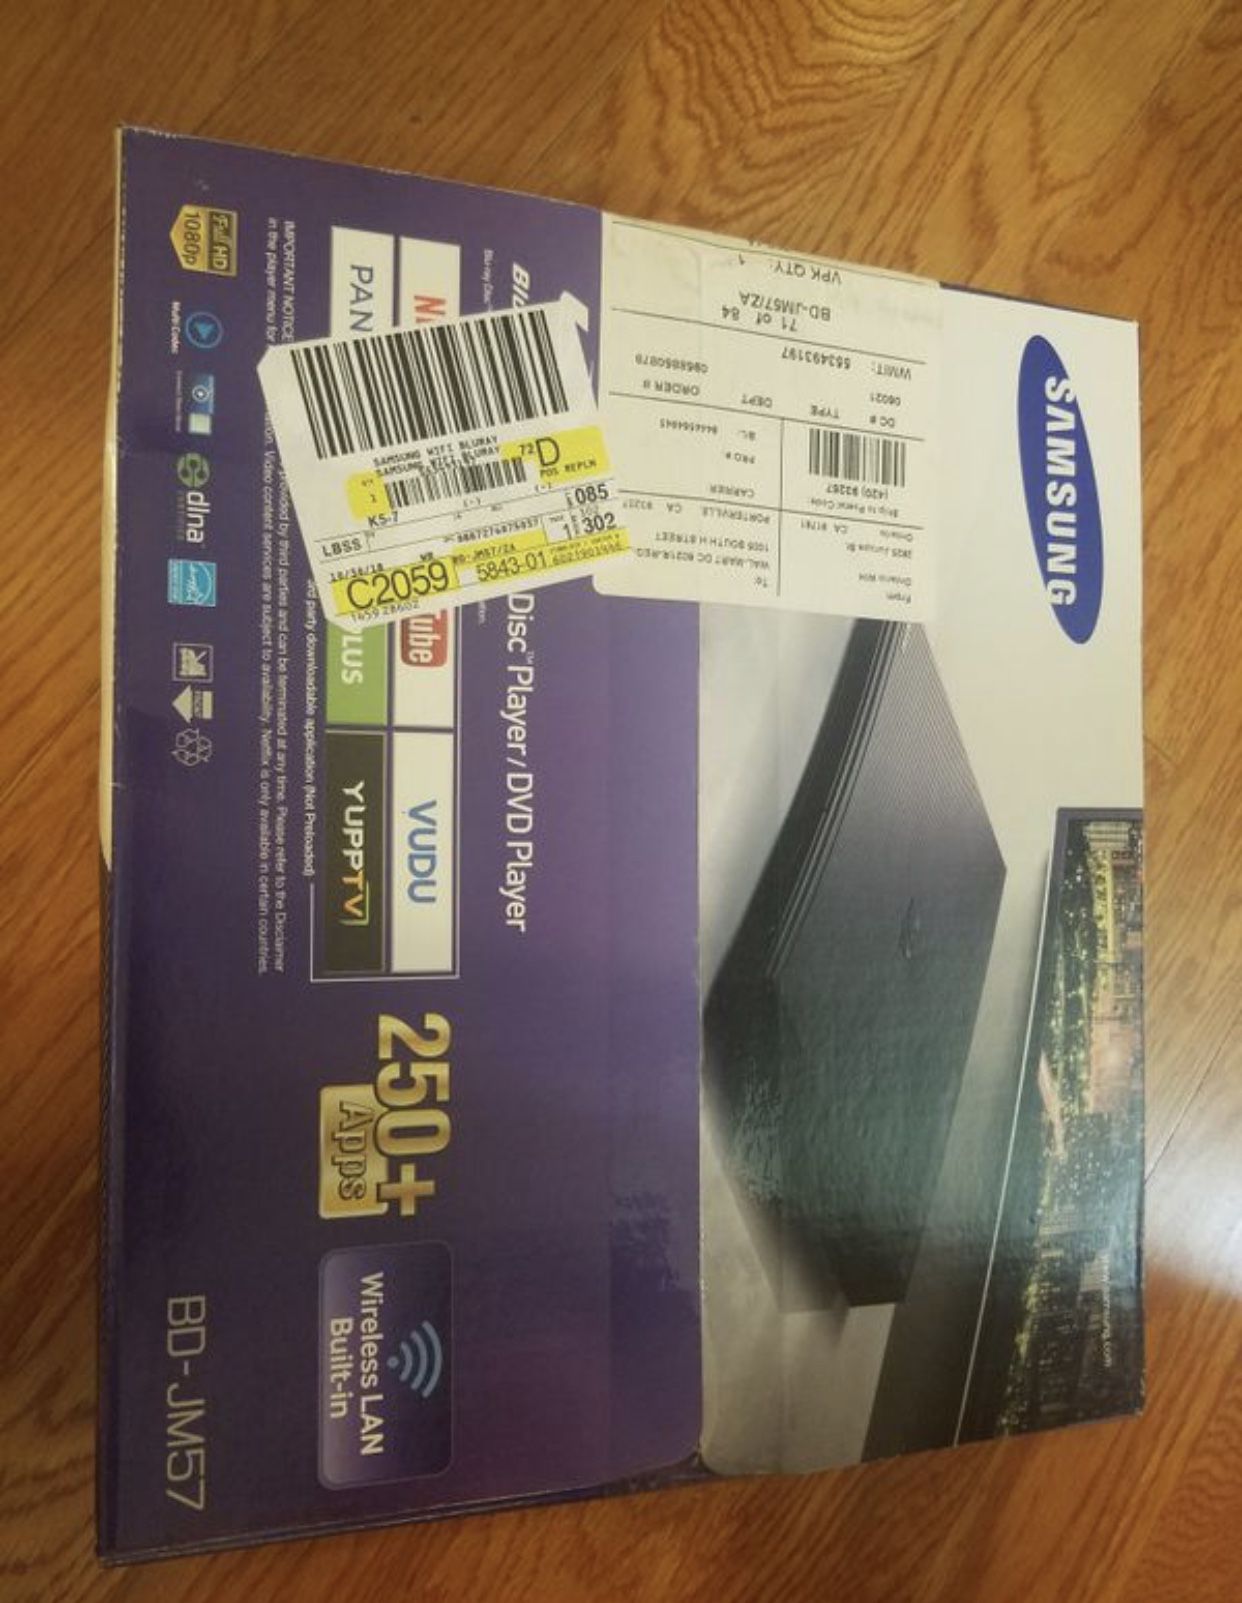 Samsung Blu Ray player - NEW!